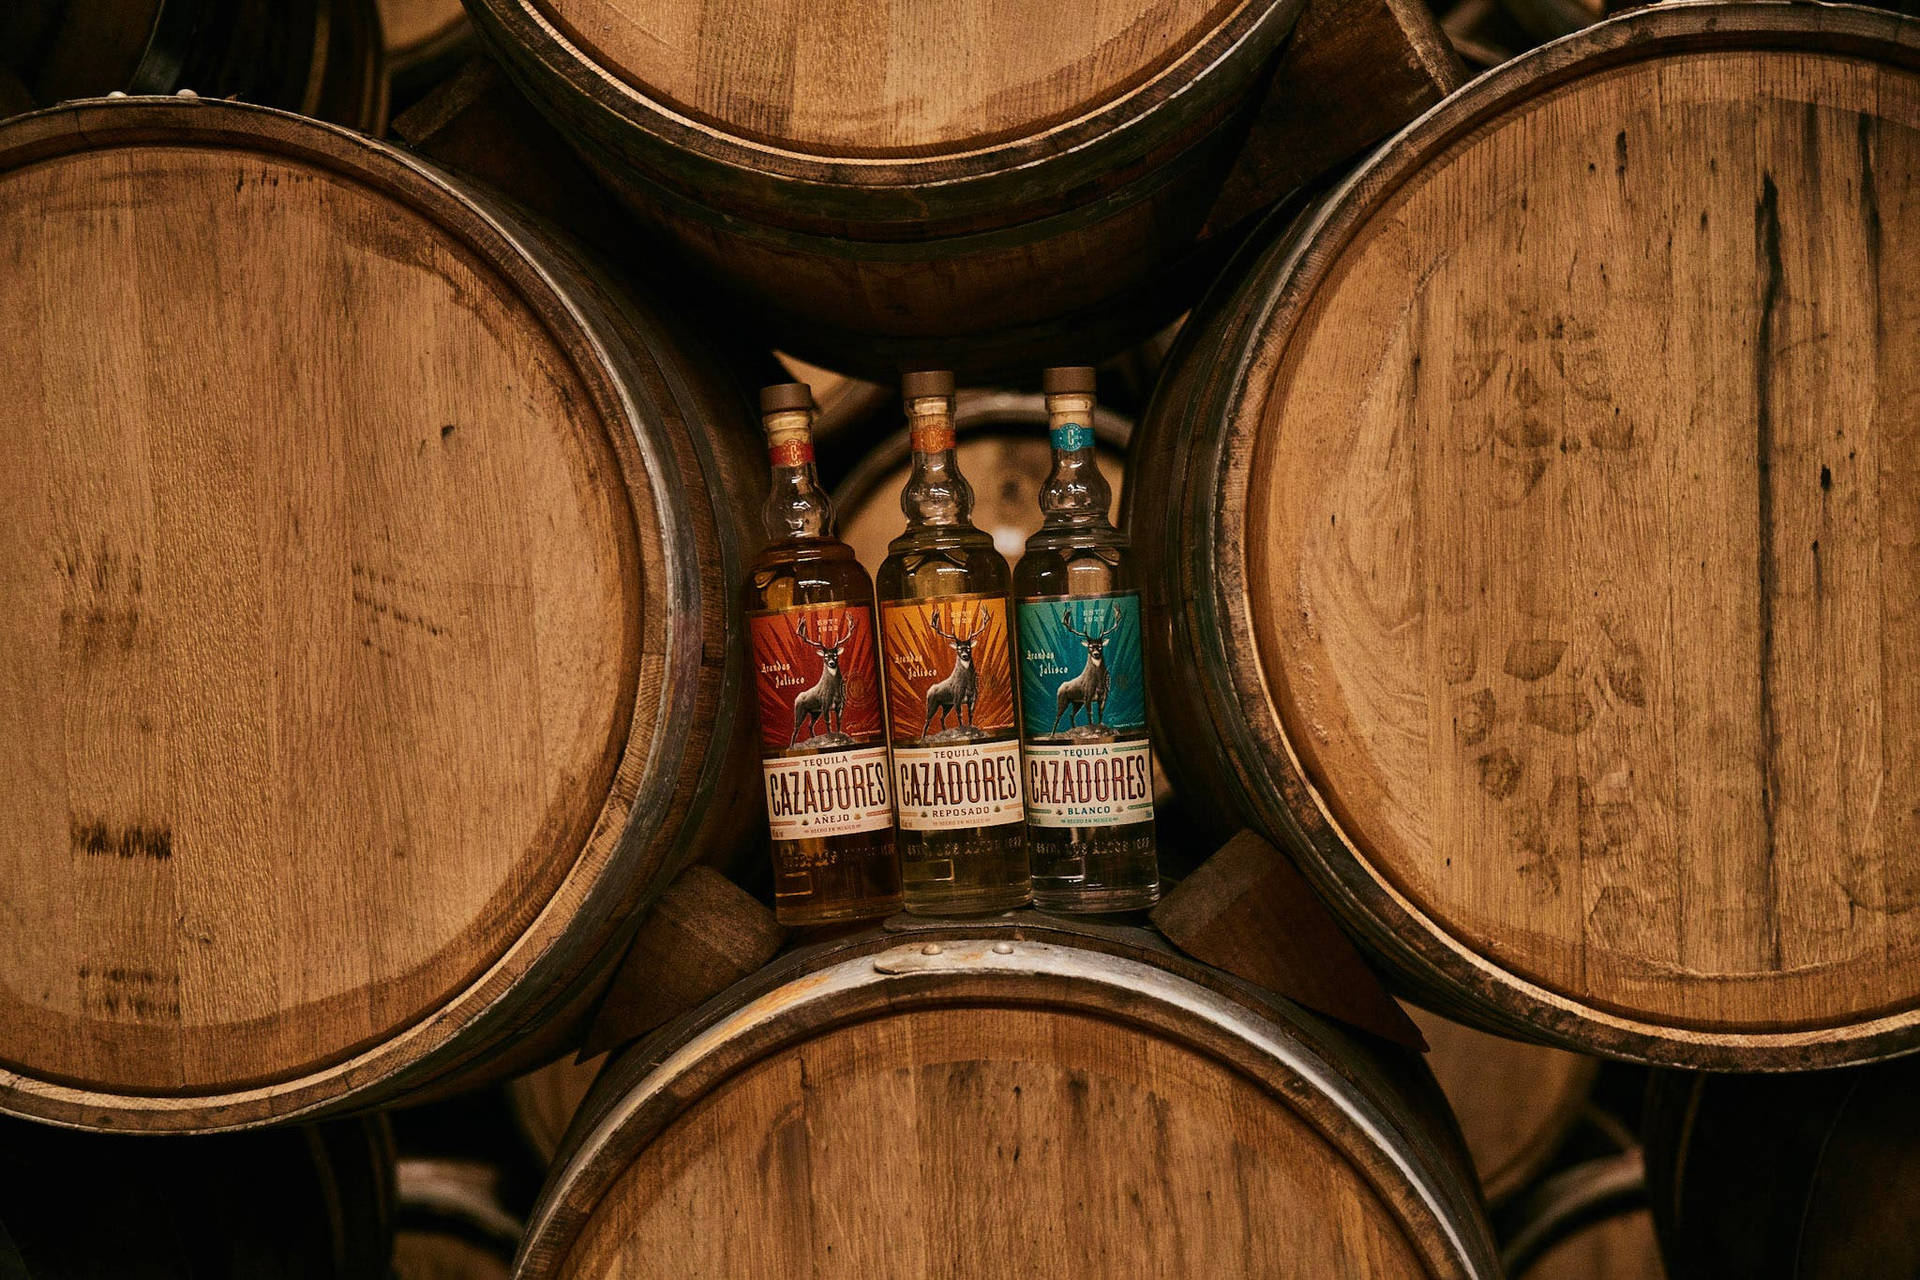 Exquisite Bottles of Cazadores Tequila Nestled between Authentic Aging Barrels. Wallpaper